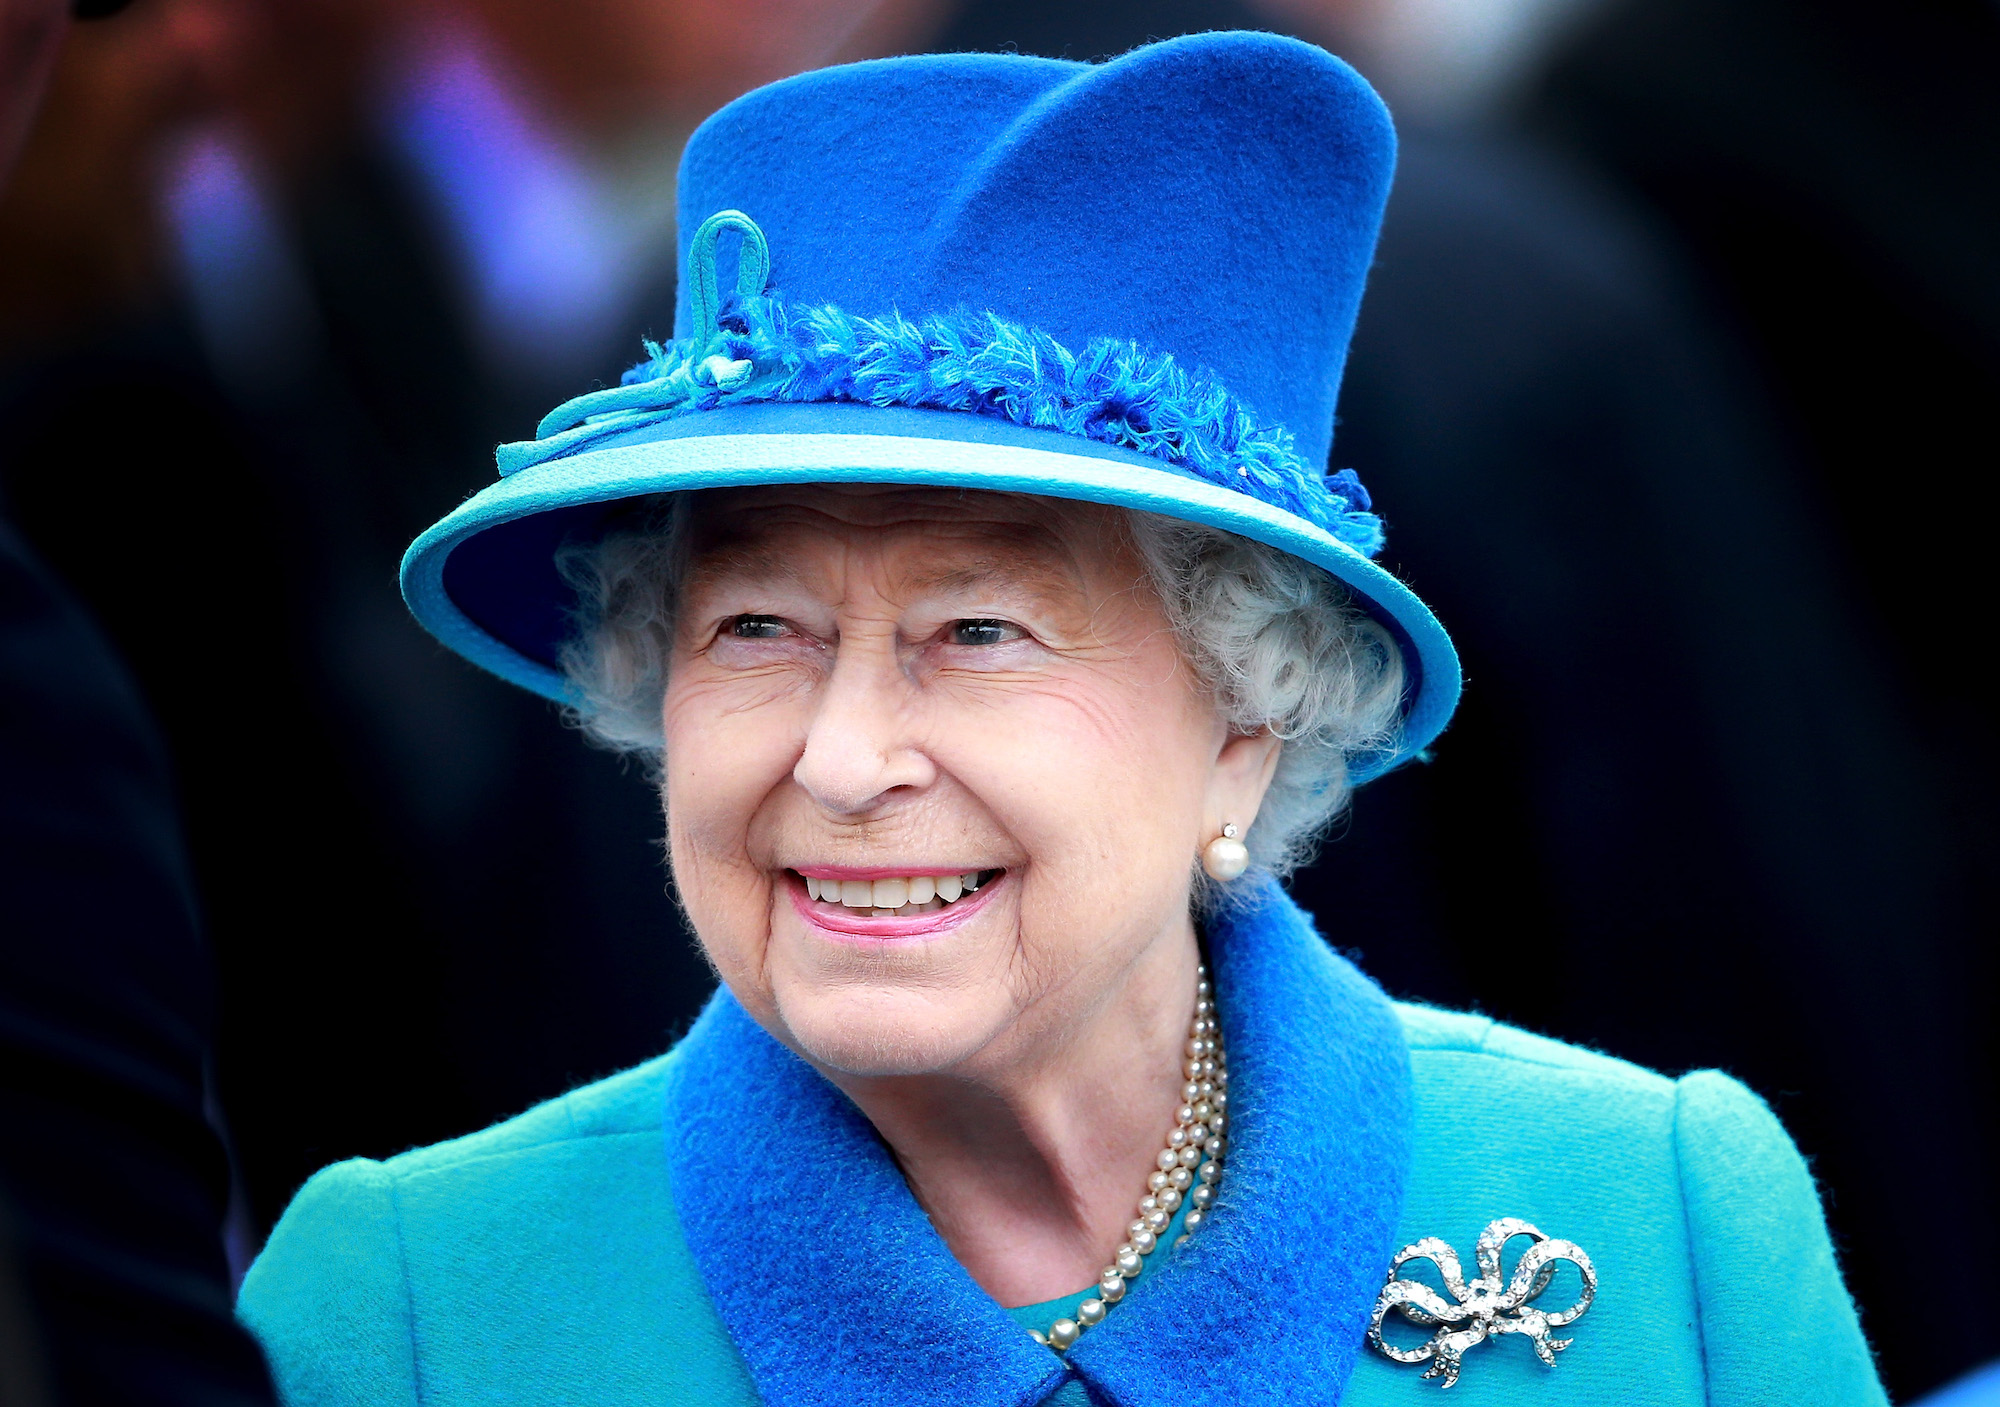 Queen Elizabeth II smiling looking away from the camera